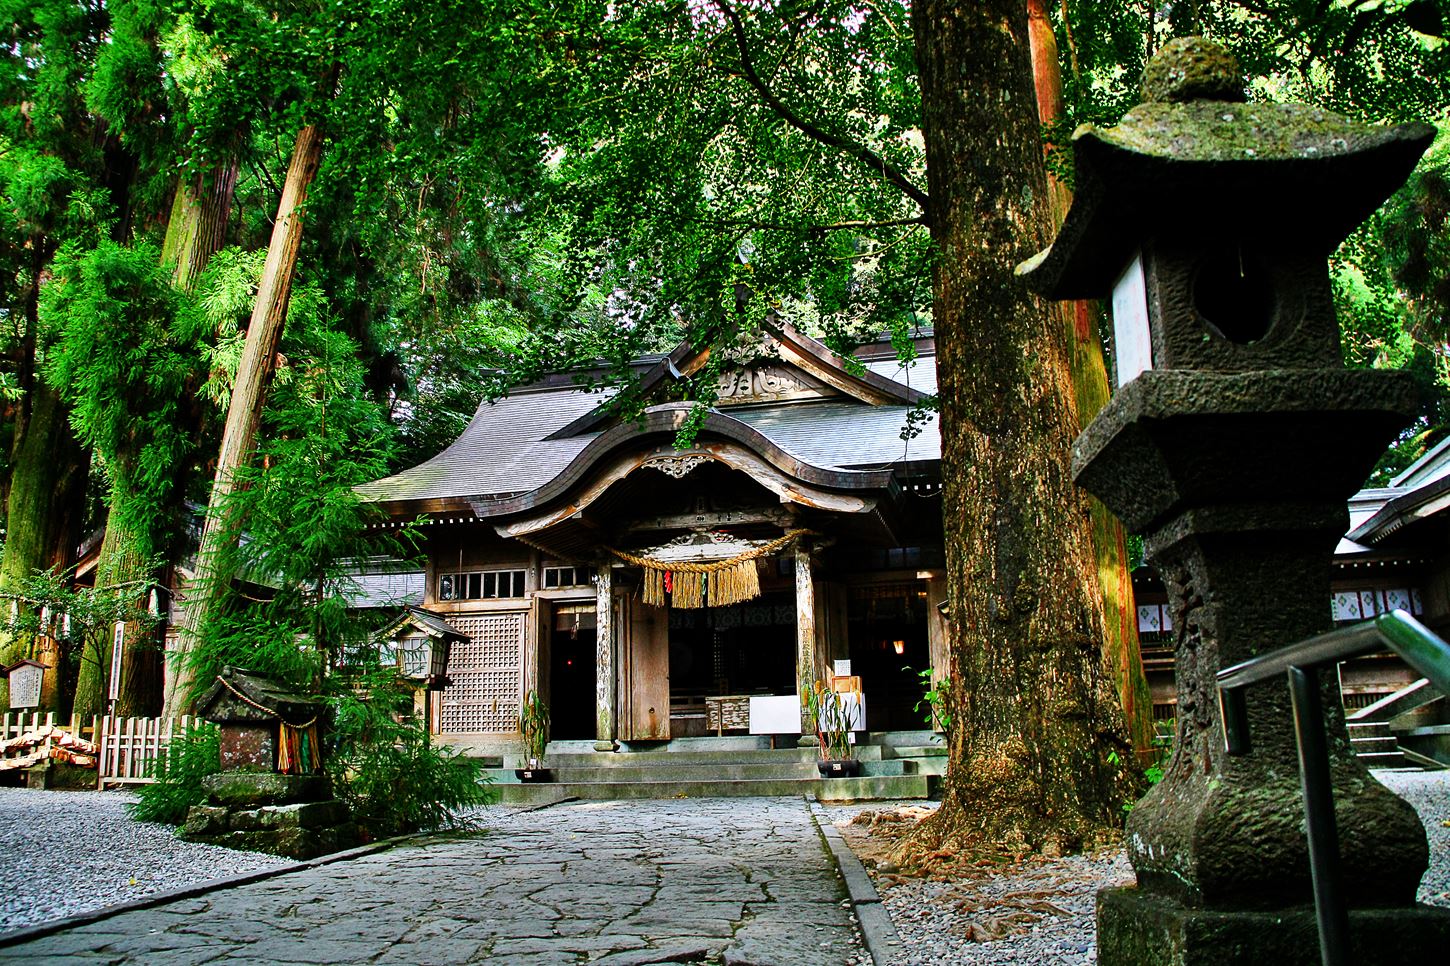 Takachiho Shrine with an old history, Takachiho Town, Miyazaki Prefecture, Japan = Shutterstock